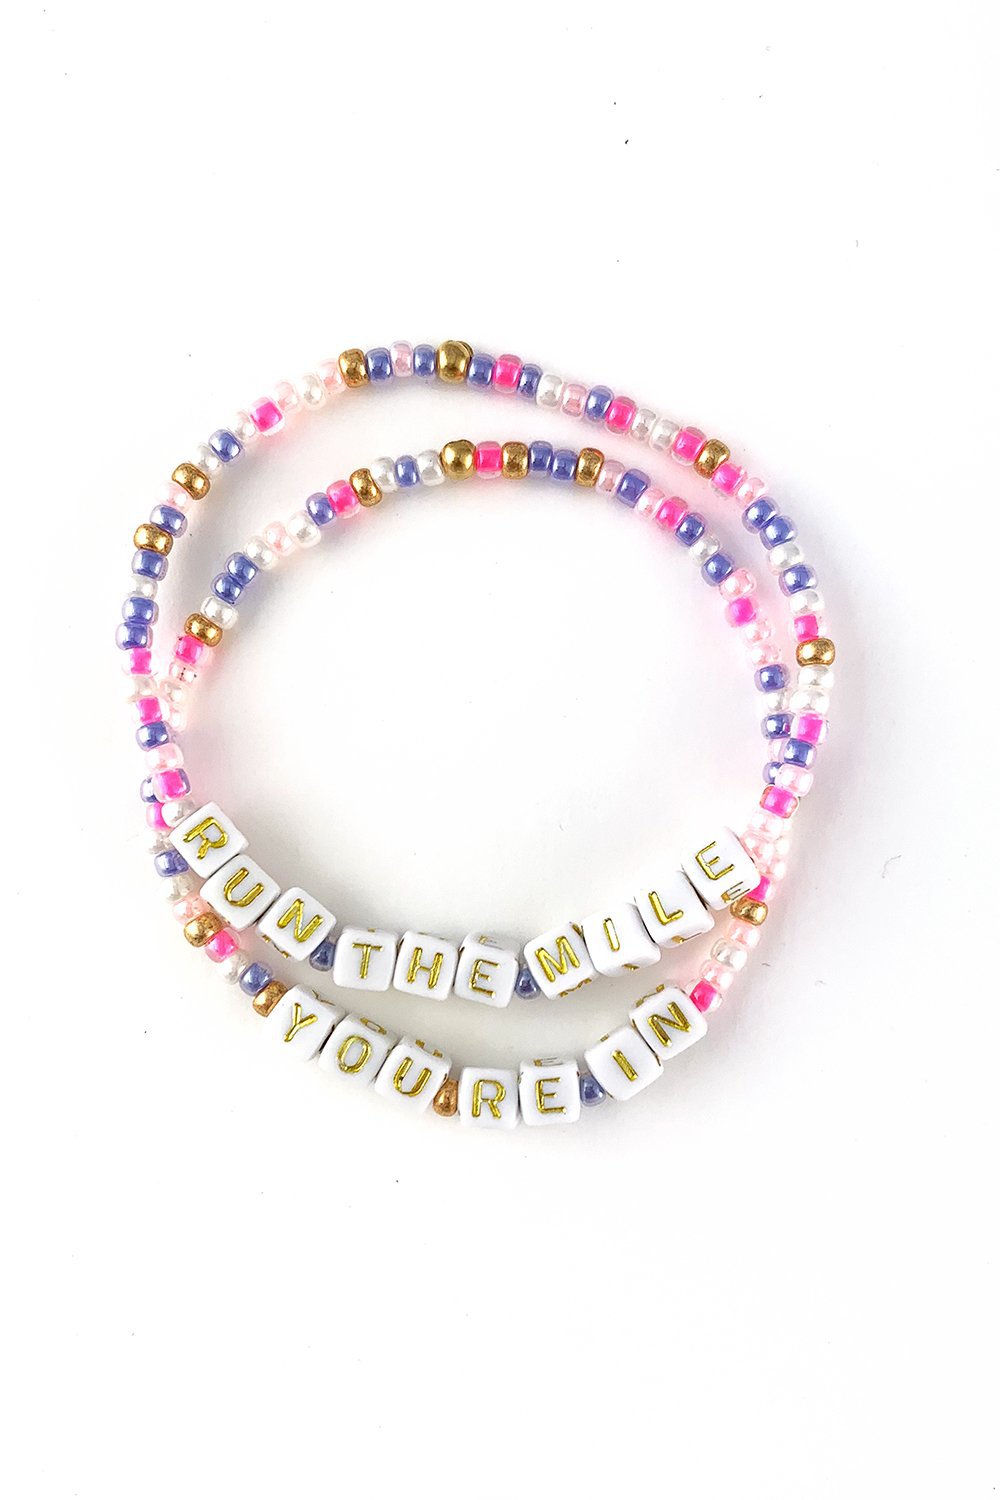 Sarah Marie Design Studio Bracelet Run The Mile You're In Bracelet